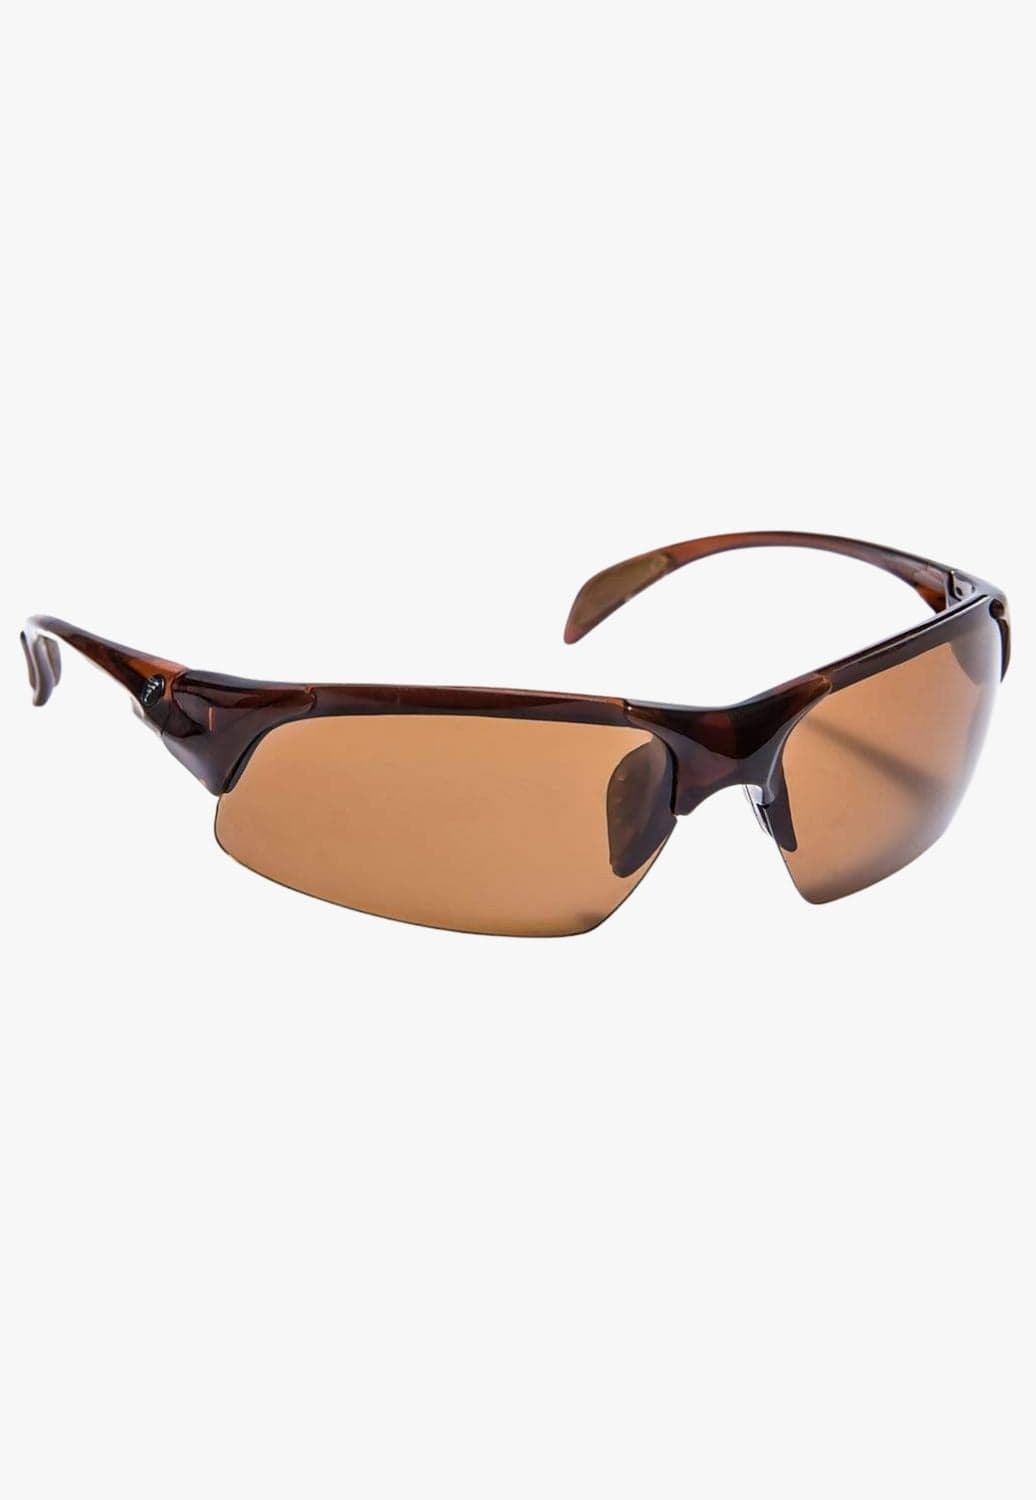 Gidgee Eyes ACCESSORIES-Sunglasses OSFA / Honey Gidgee Eyes Cleancut Sunglasses